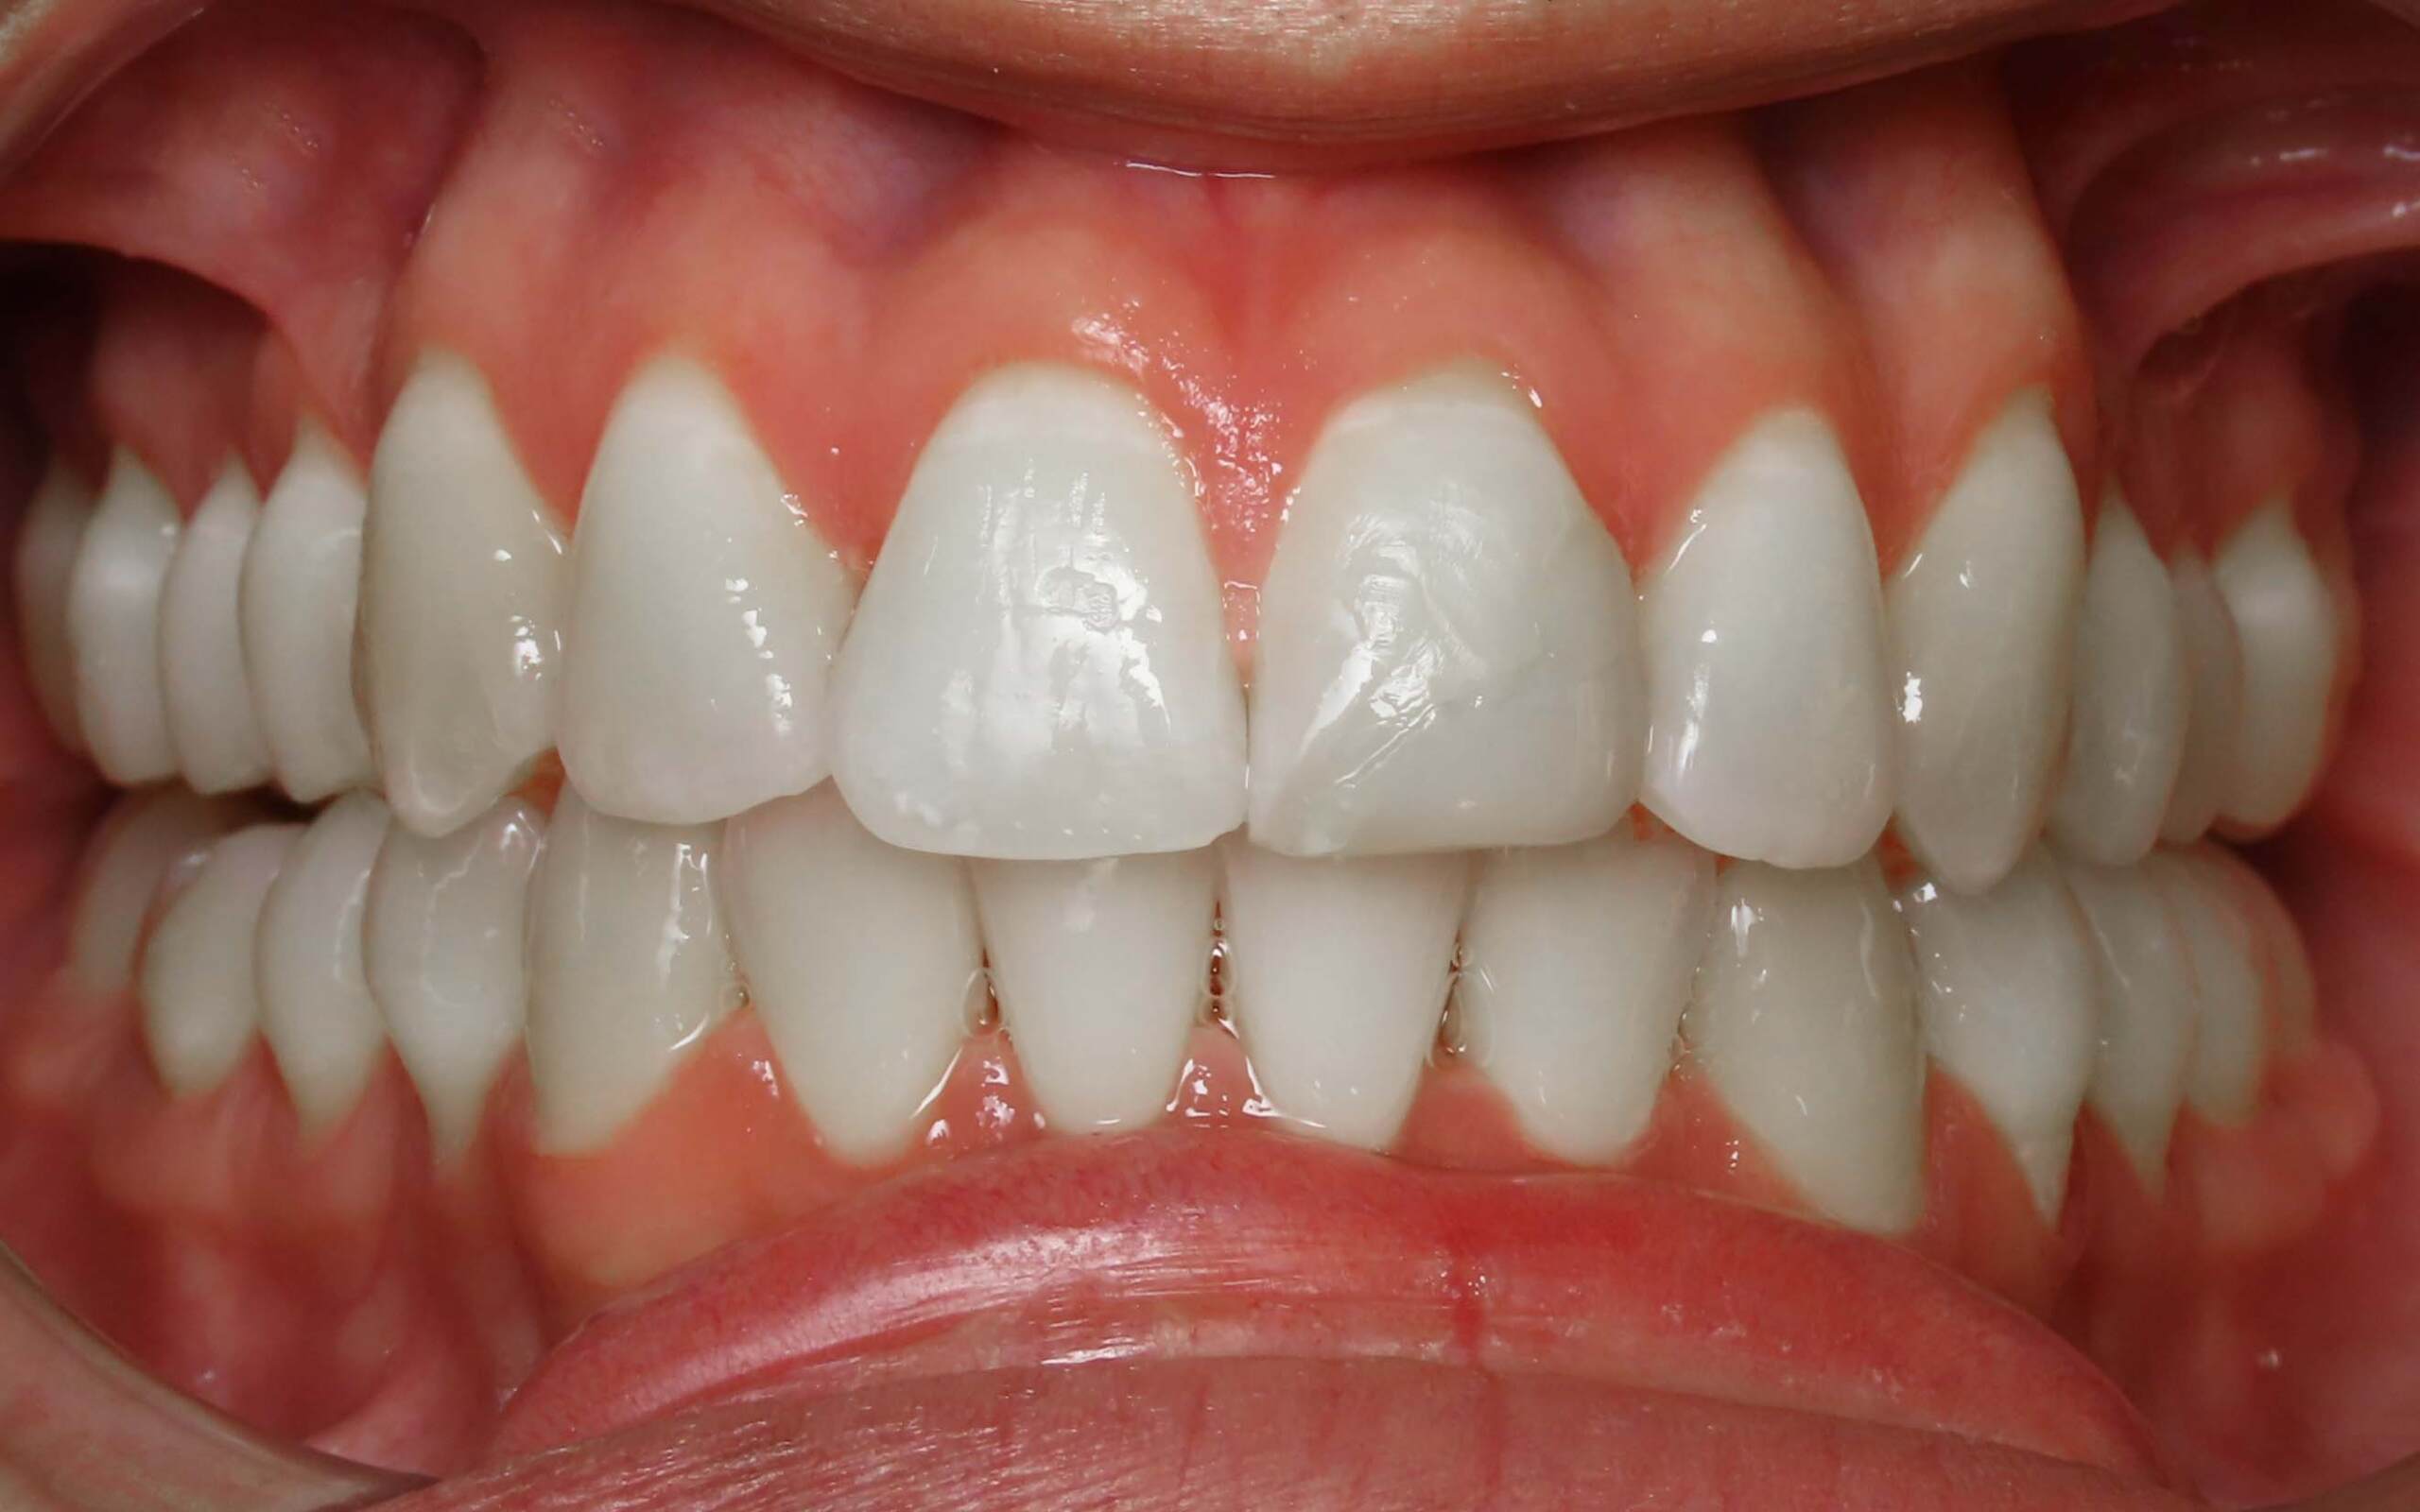 Parks Orthodontics Invisalign Patient 16 - After